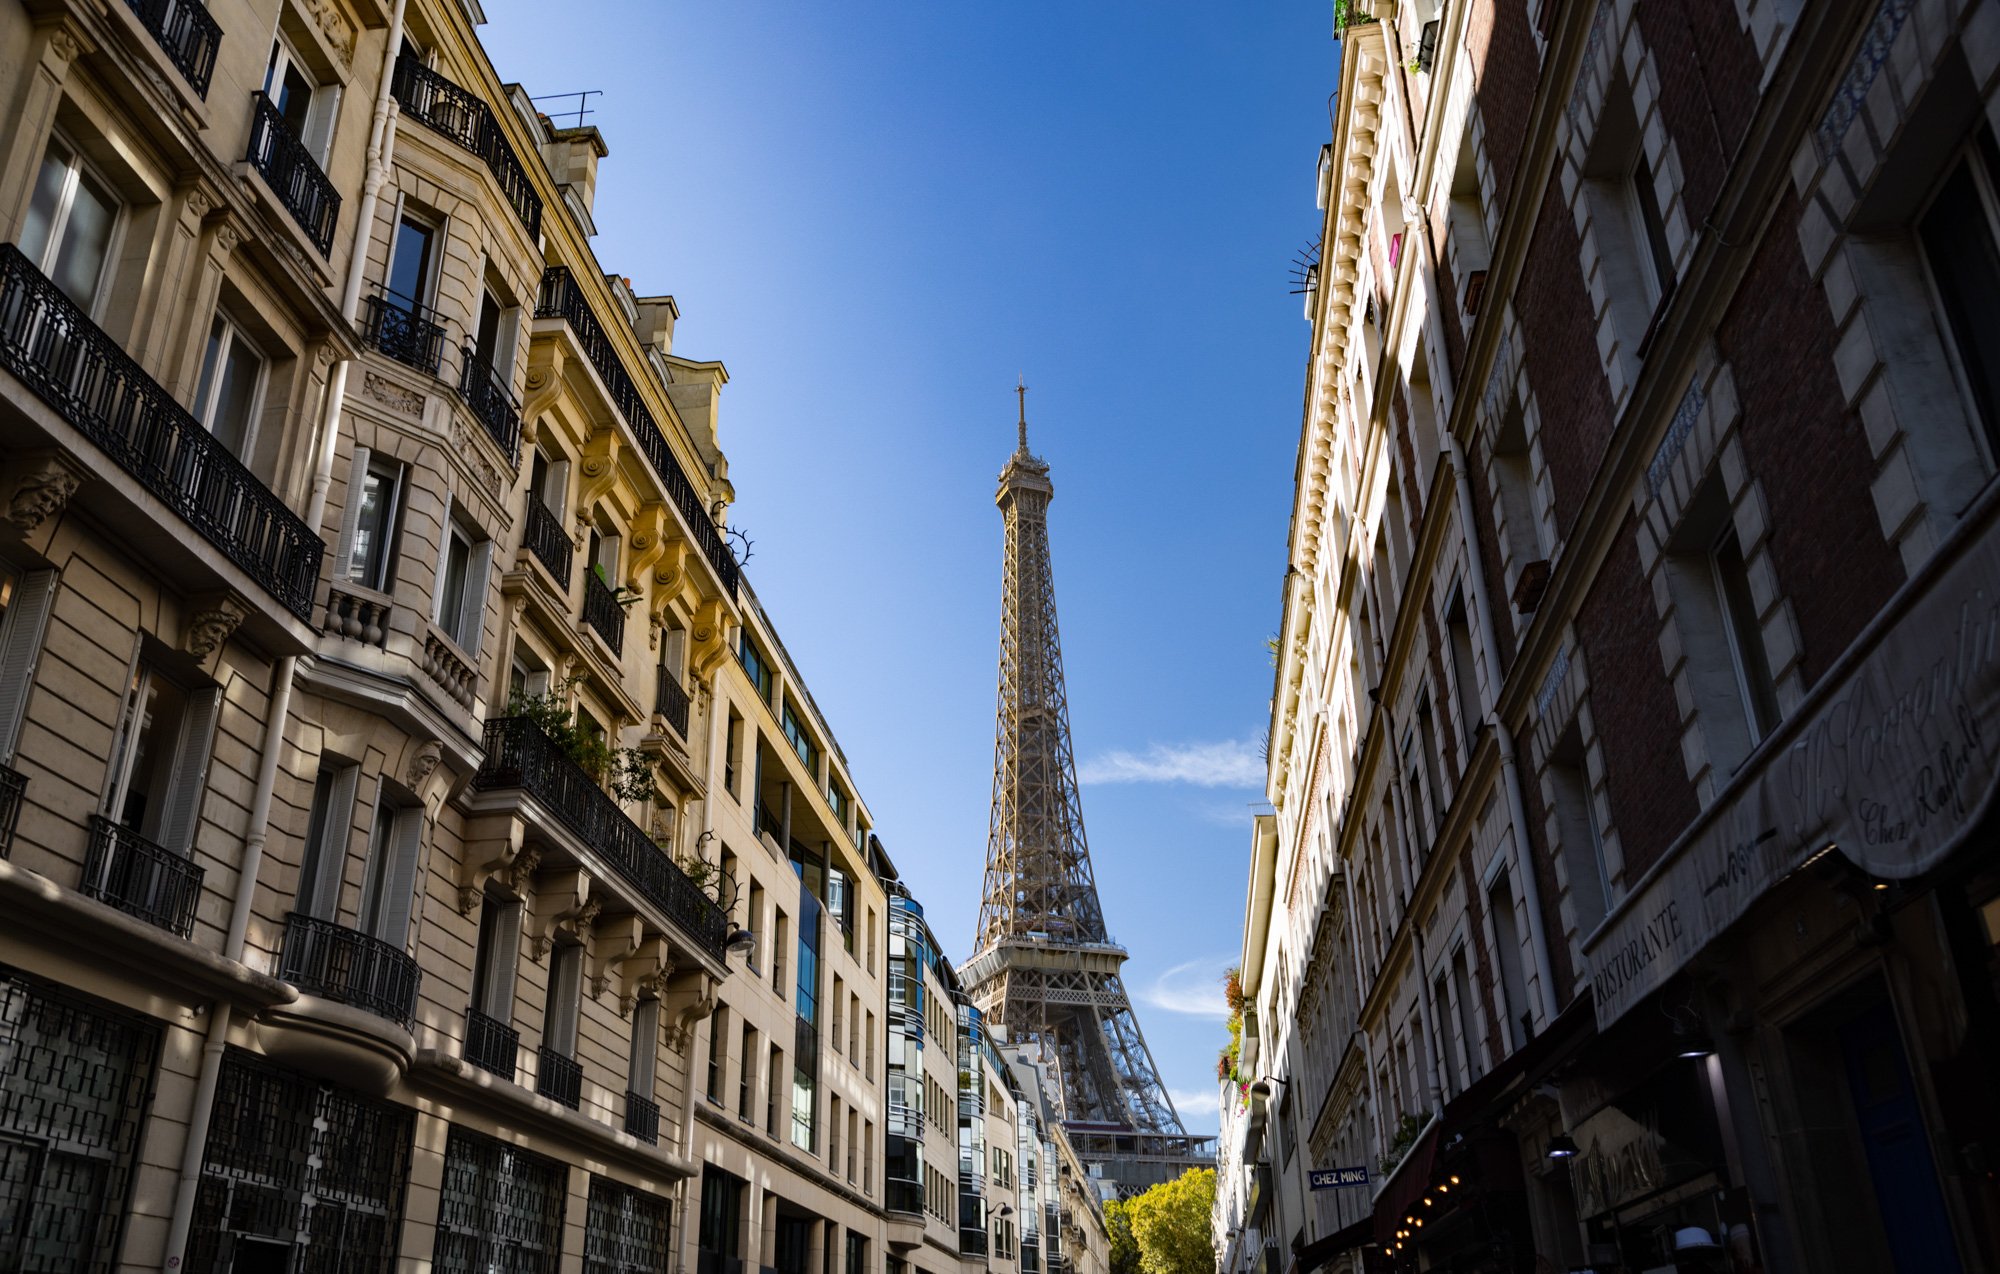  Eiffel Tower Street View, Paris, France 